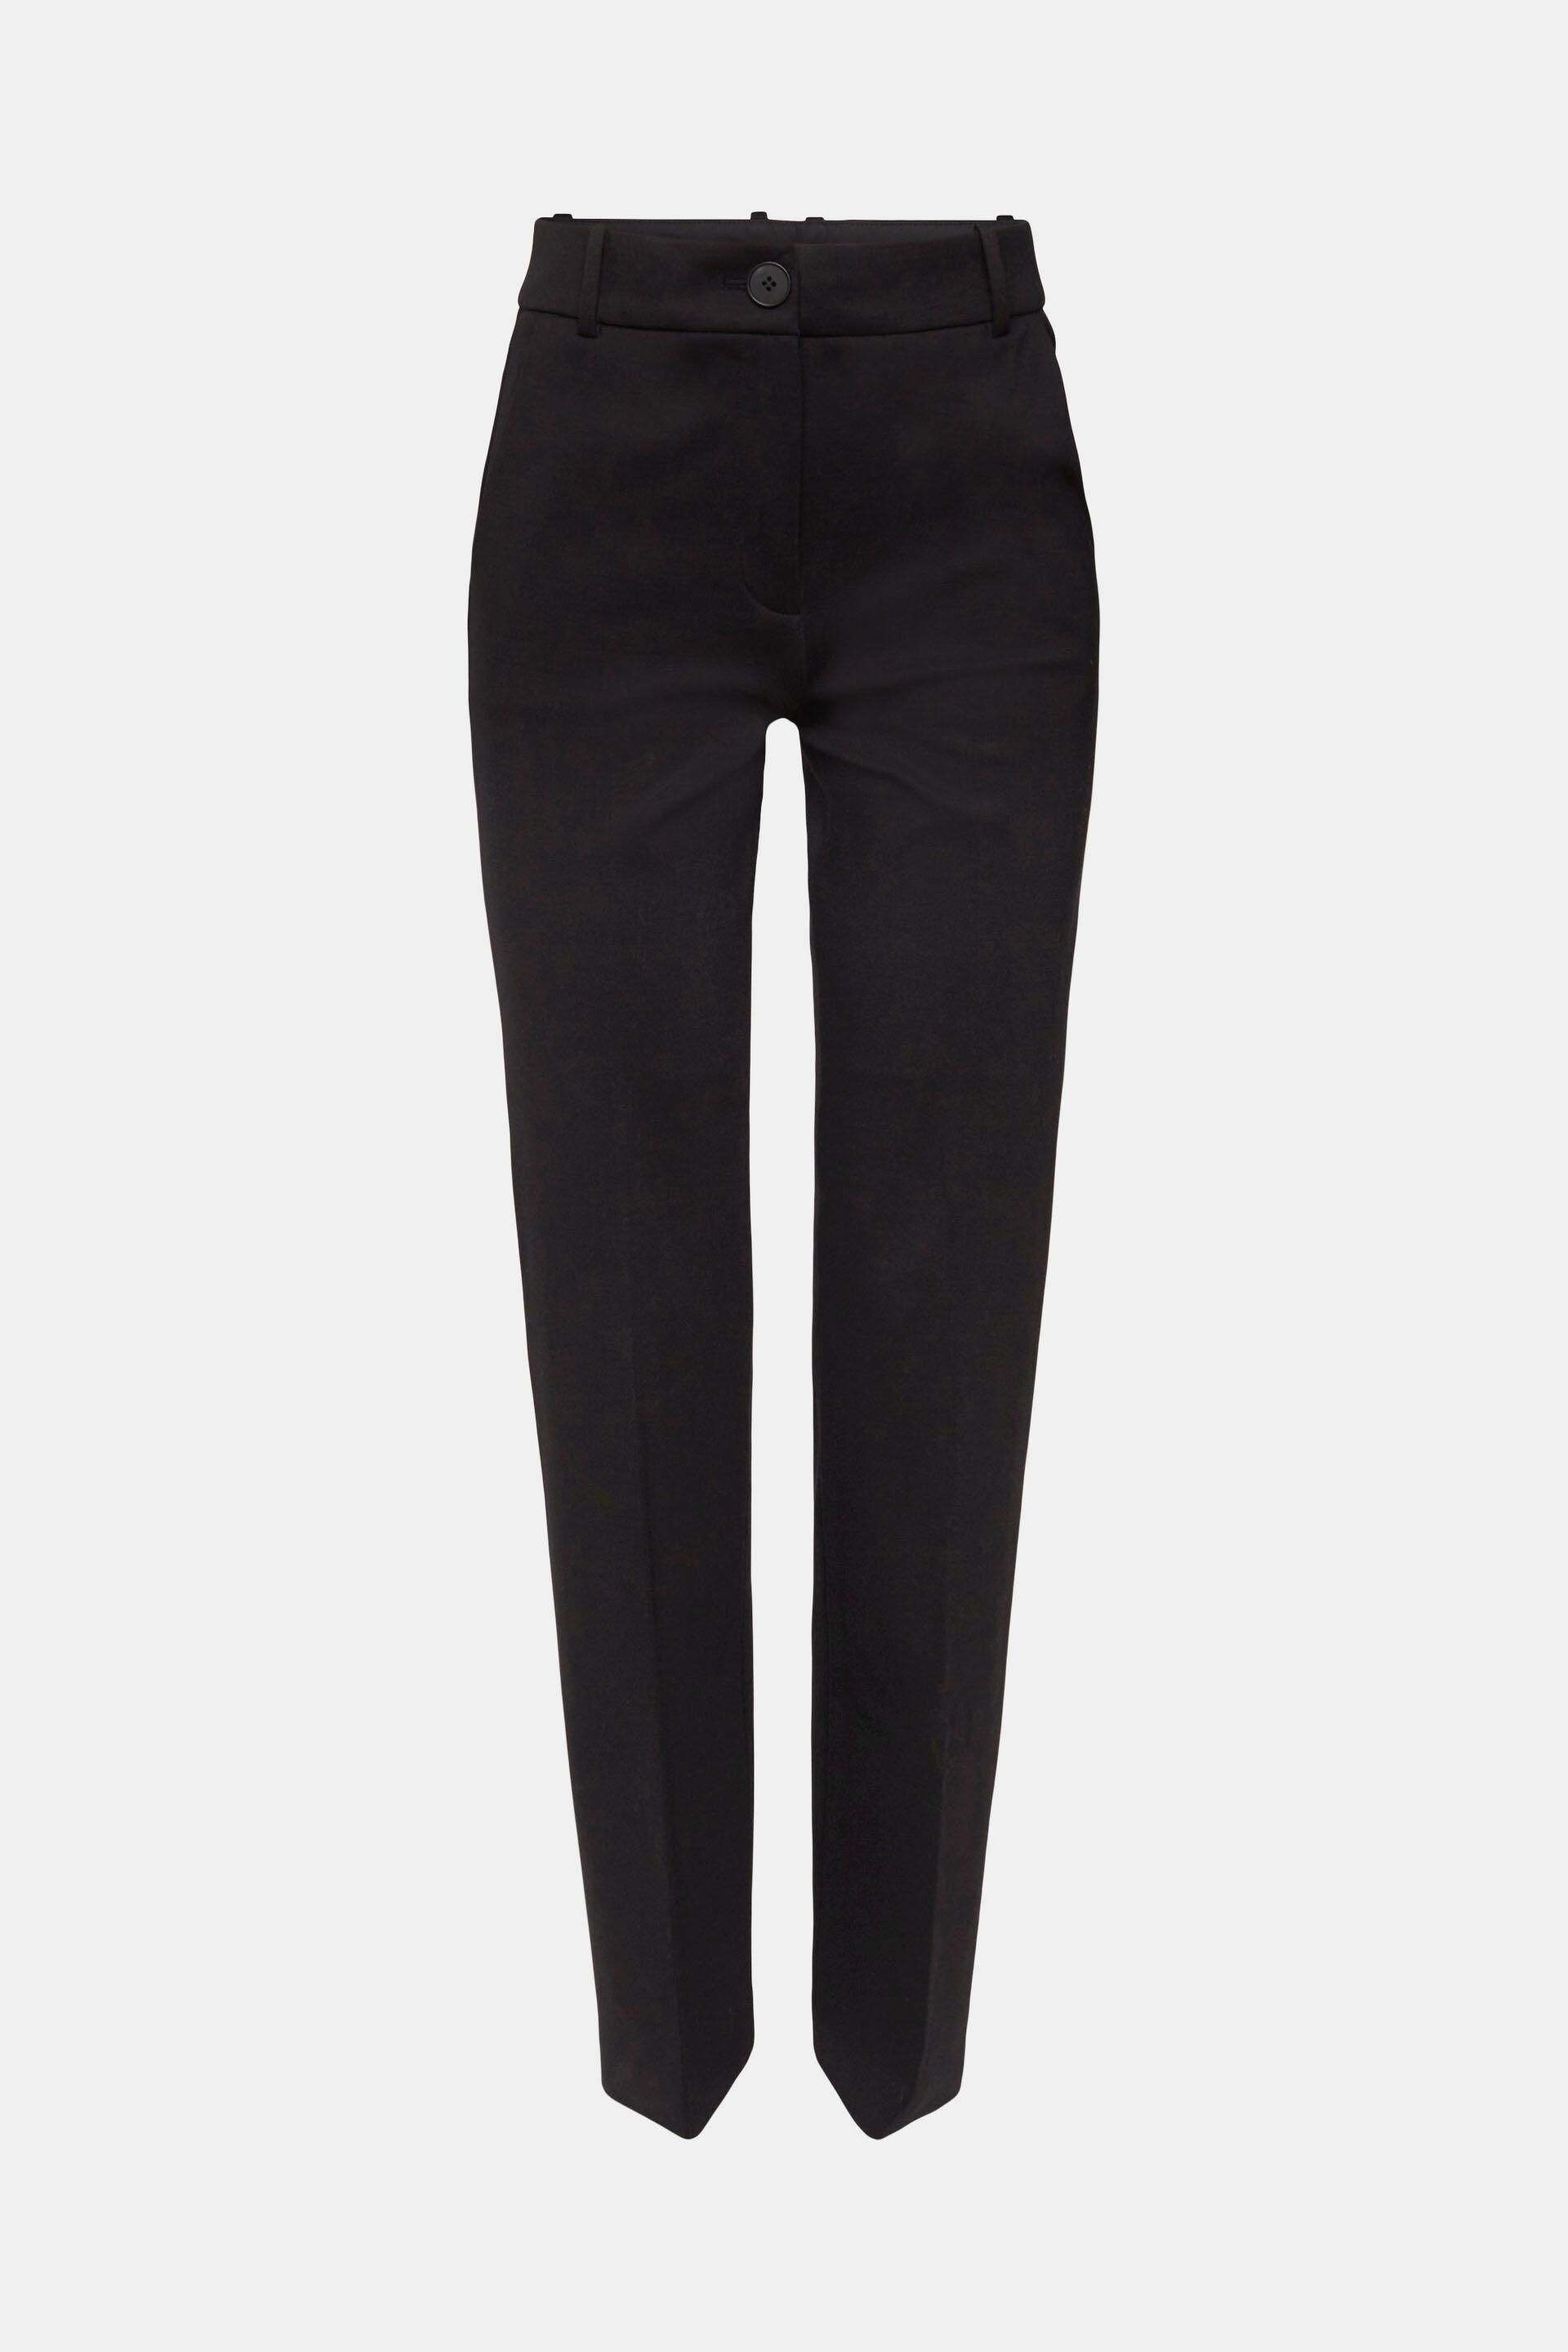 s.Oliver Hoge taille broek zwart-wit casual uitstraling Mode Broeken Hoge taille broeken 